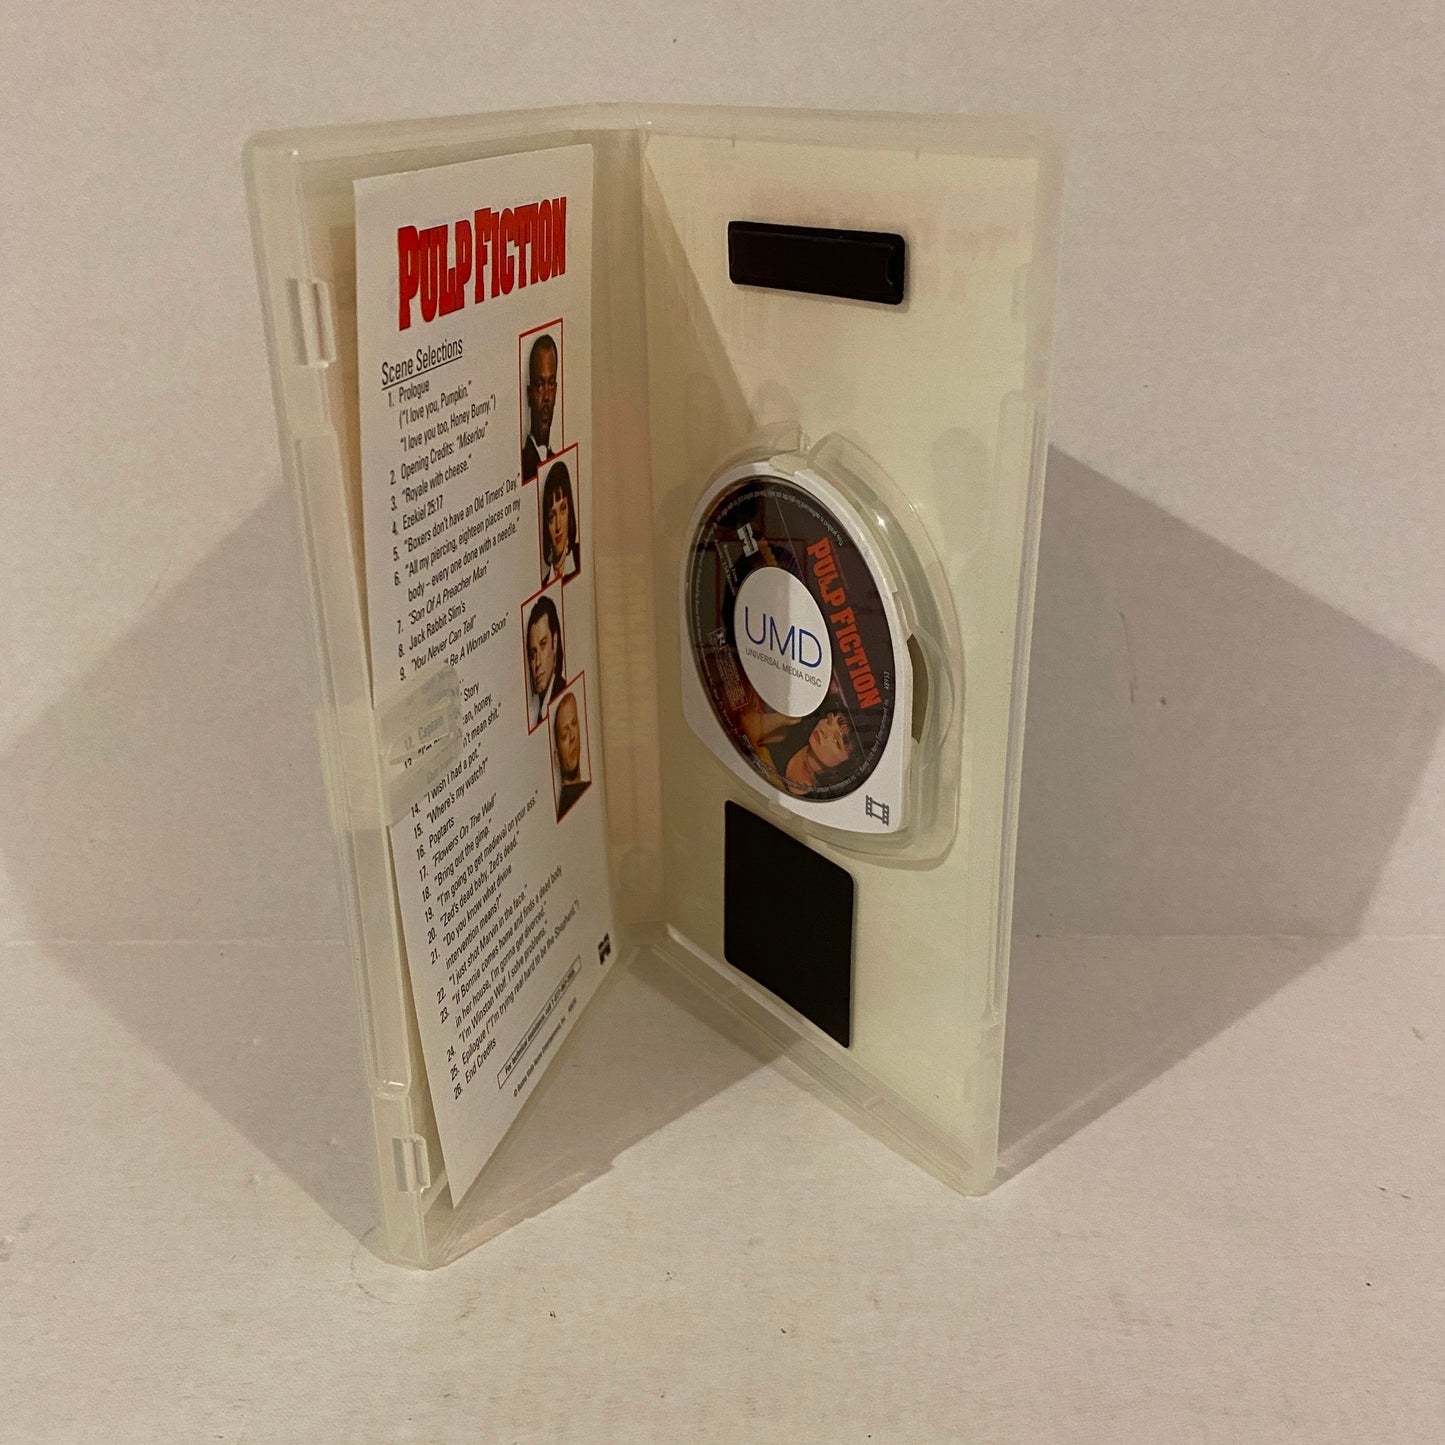 Pulp Fiction UMD For PSP